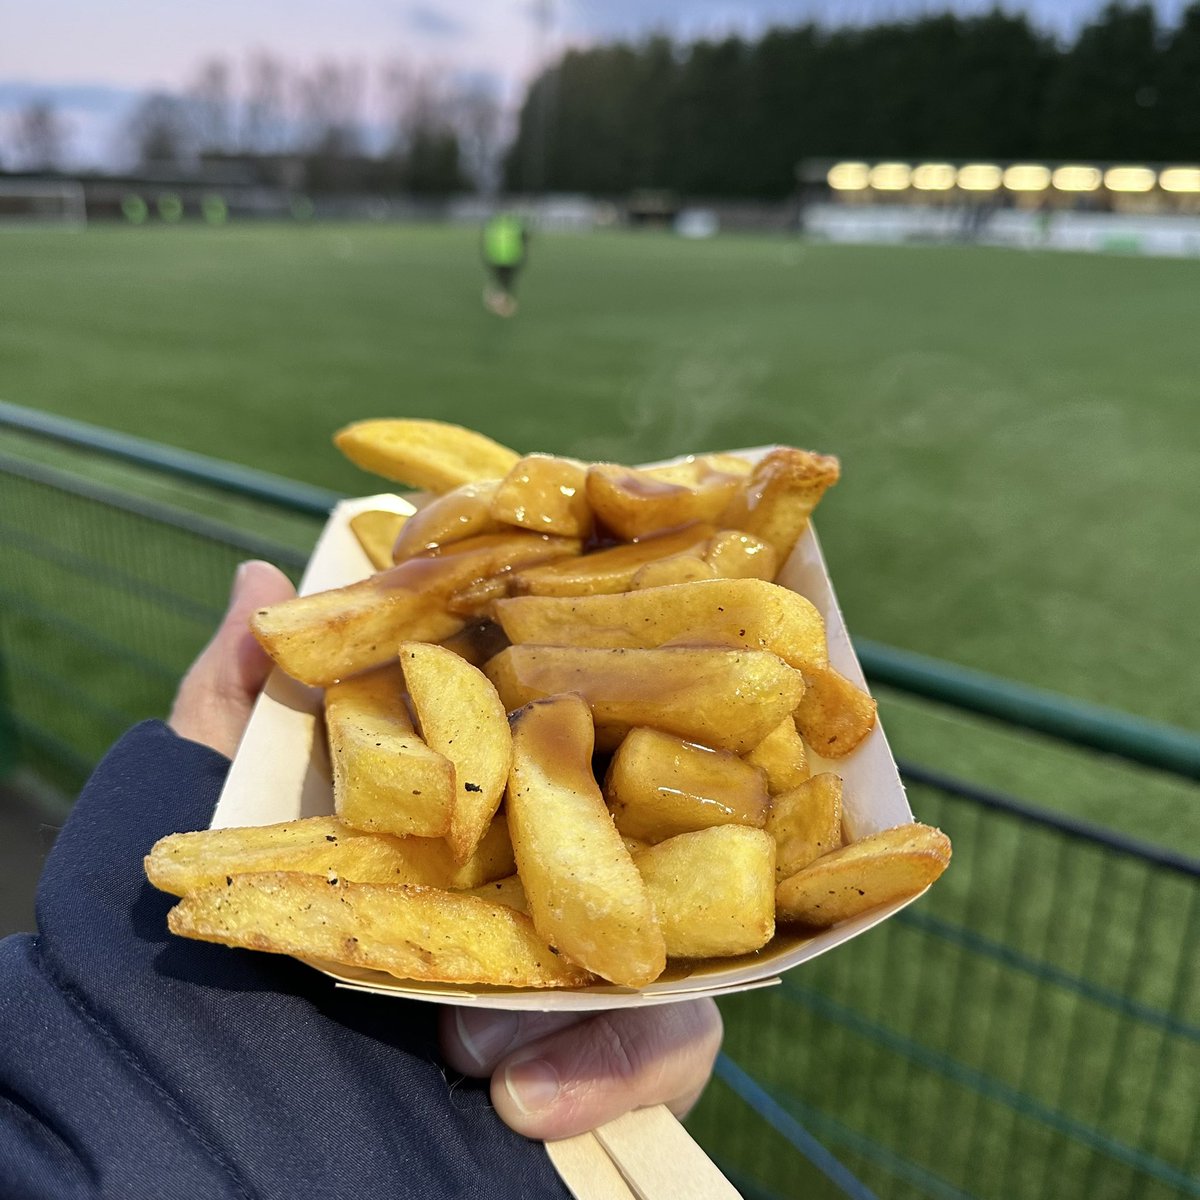 Chips & Gravy @MorpethTownAFC £2.50, delicious 😋 
@FootyScran #upthepeth